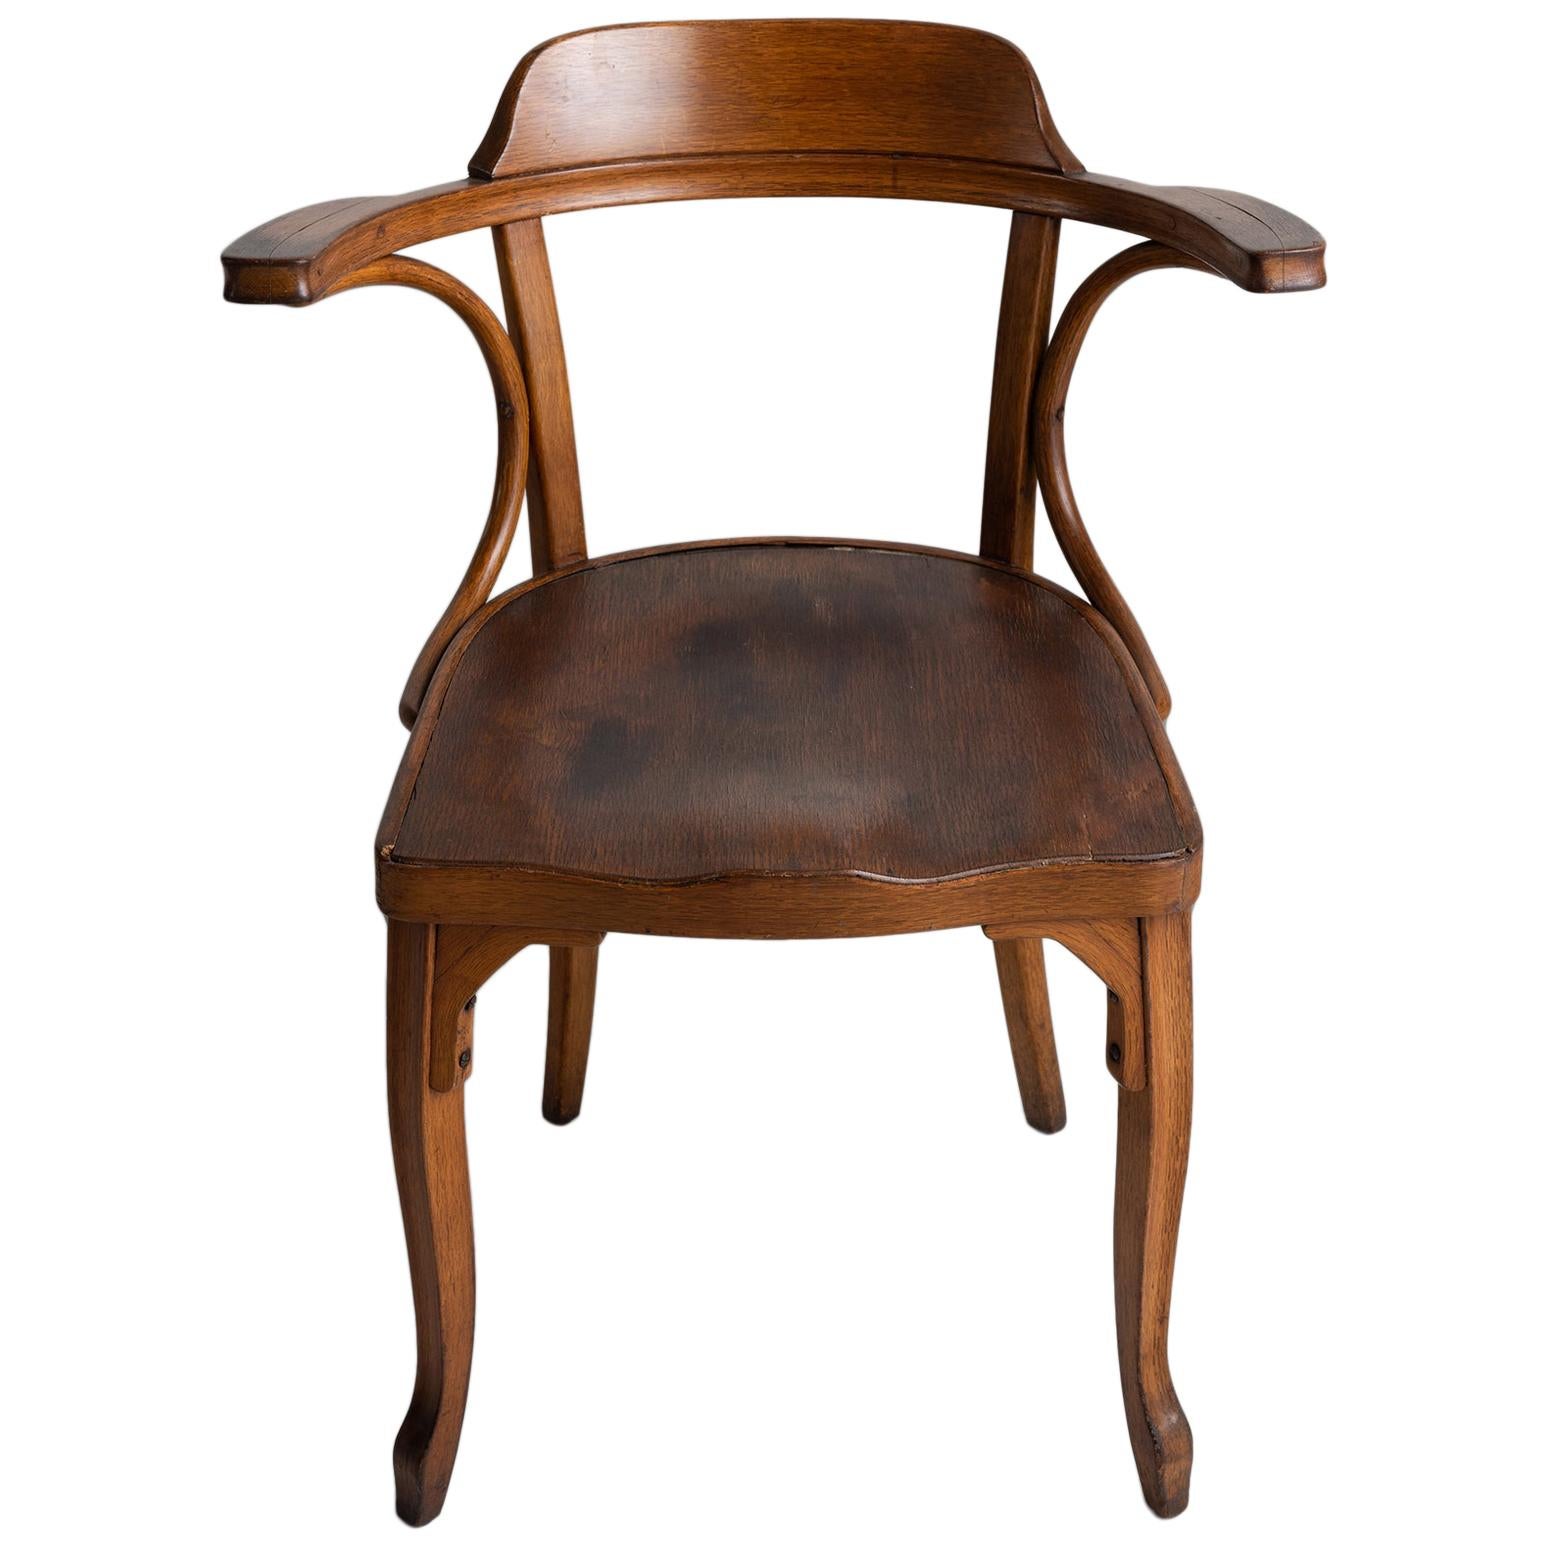 Unique bentwood armchair with elegant curves, original condition.